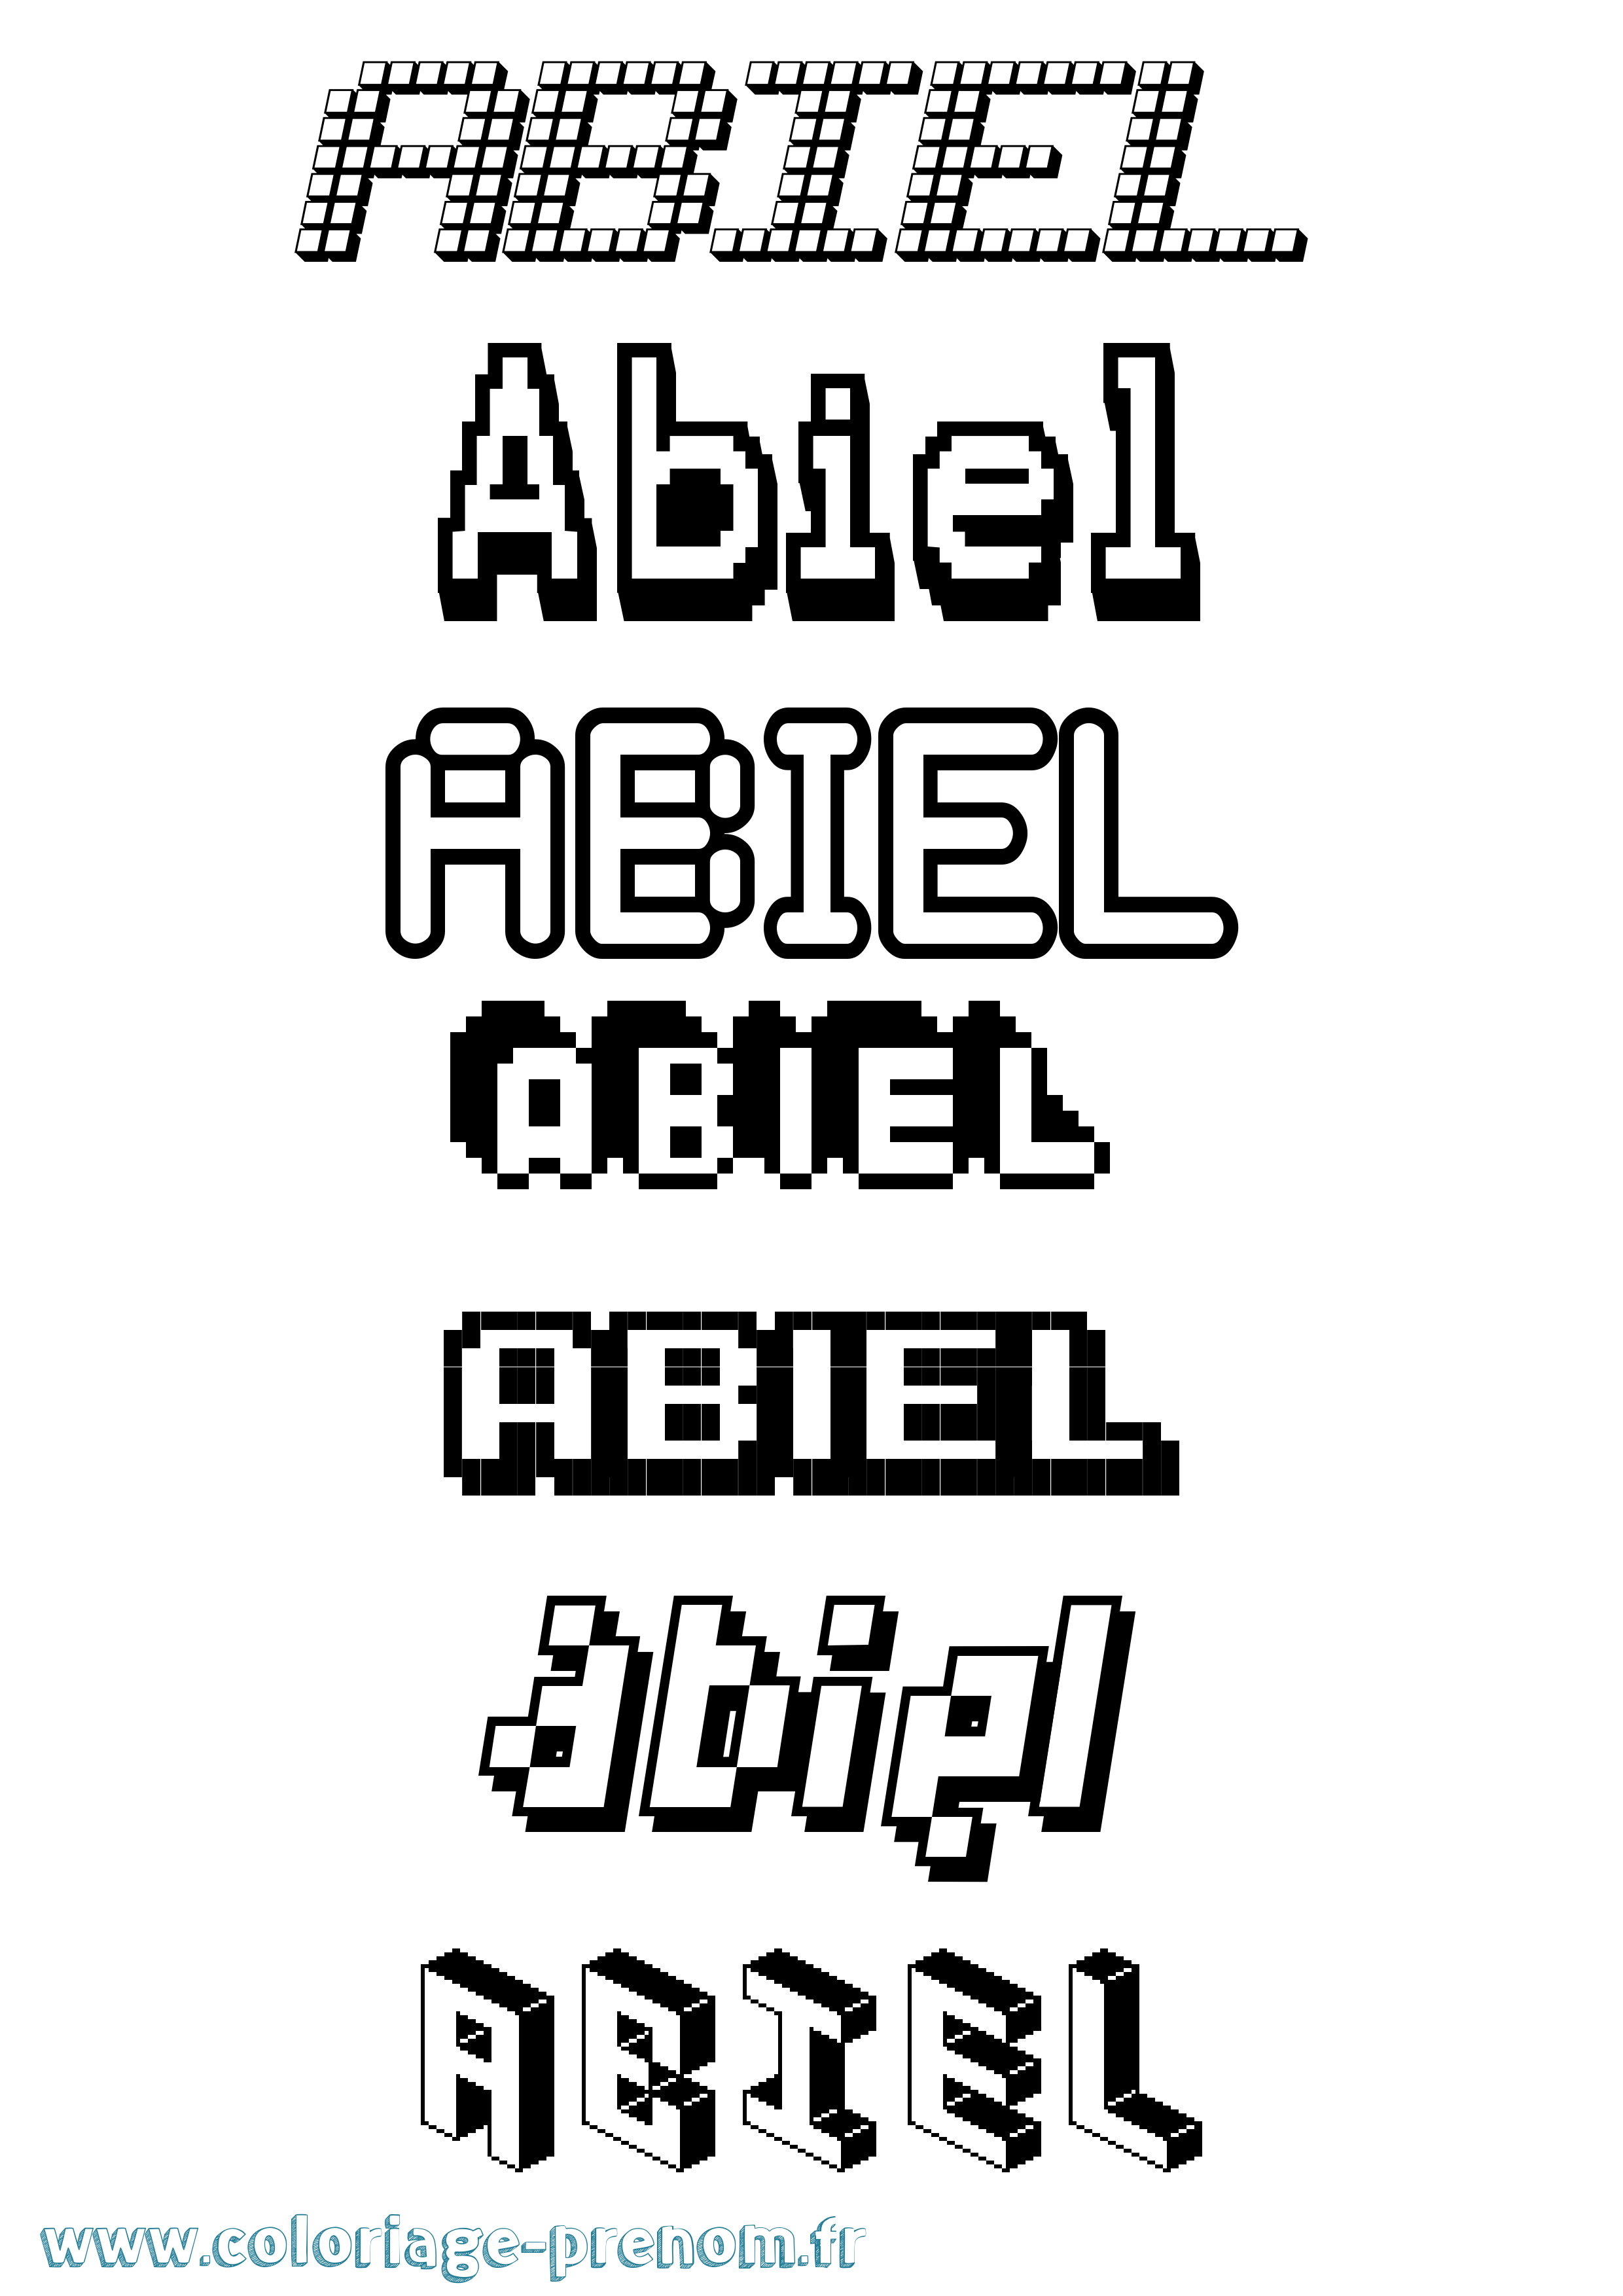 Coloriage prénom Abiel Pixel